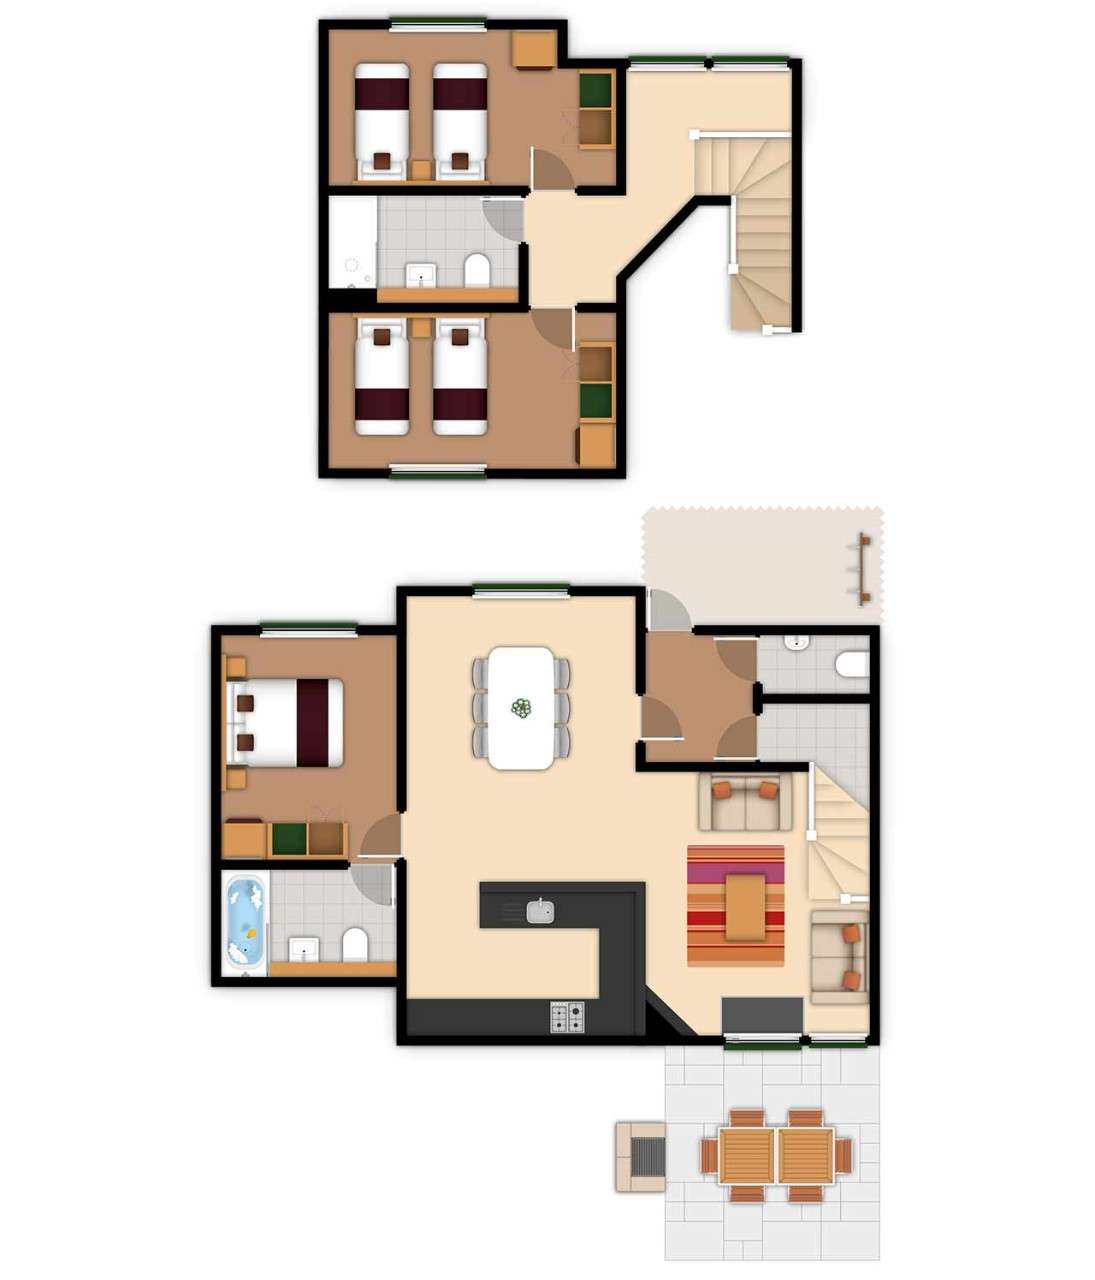 3 bedroom Woodland Lodge, detached, twostorey Center Parcs